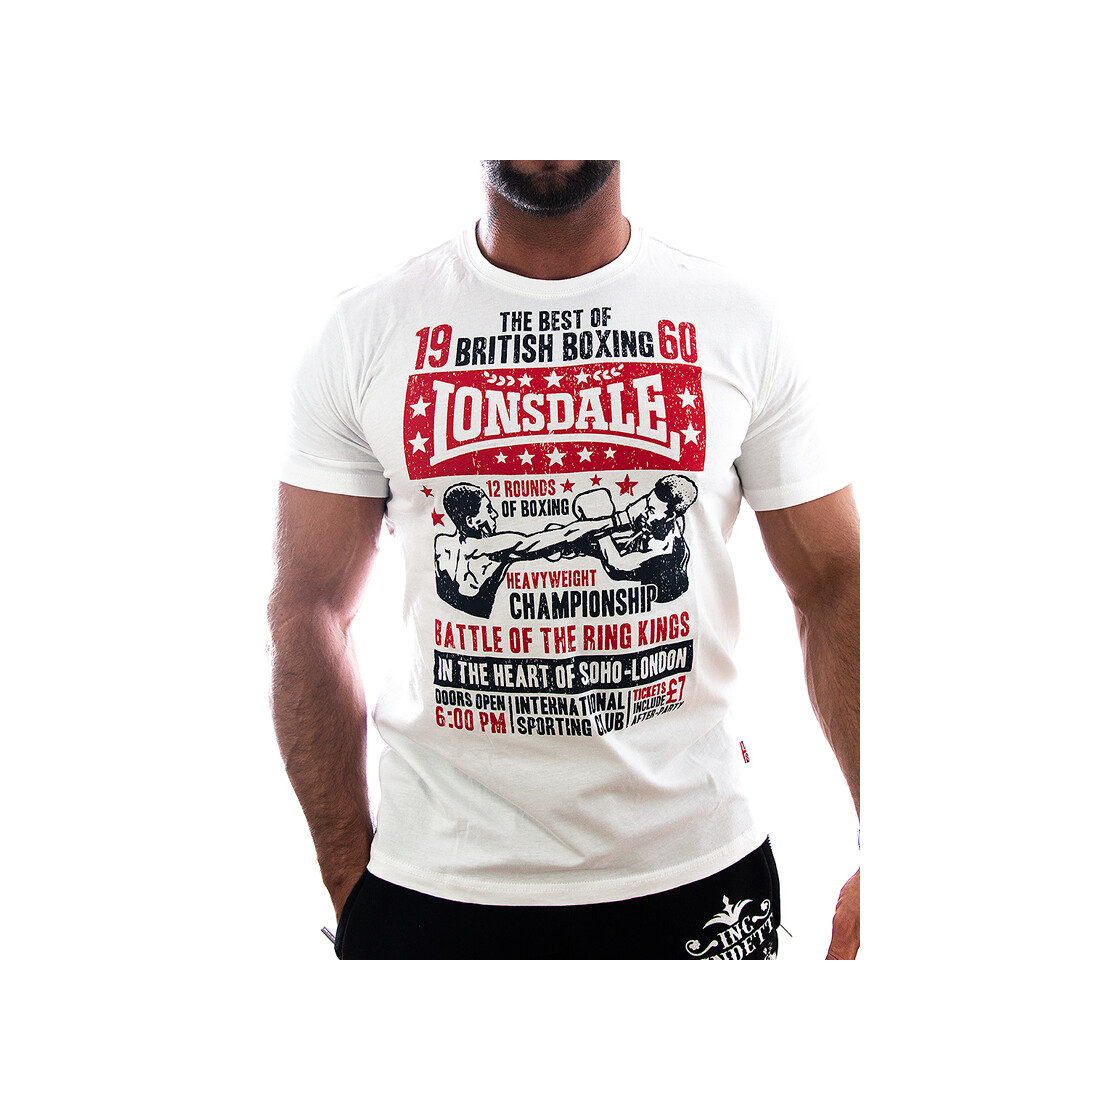 Lonsdale T-shirt Auckengill white 117221 - 7Guns